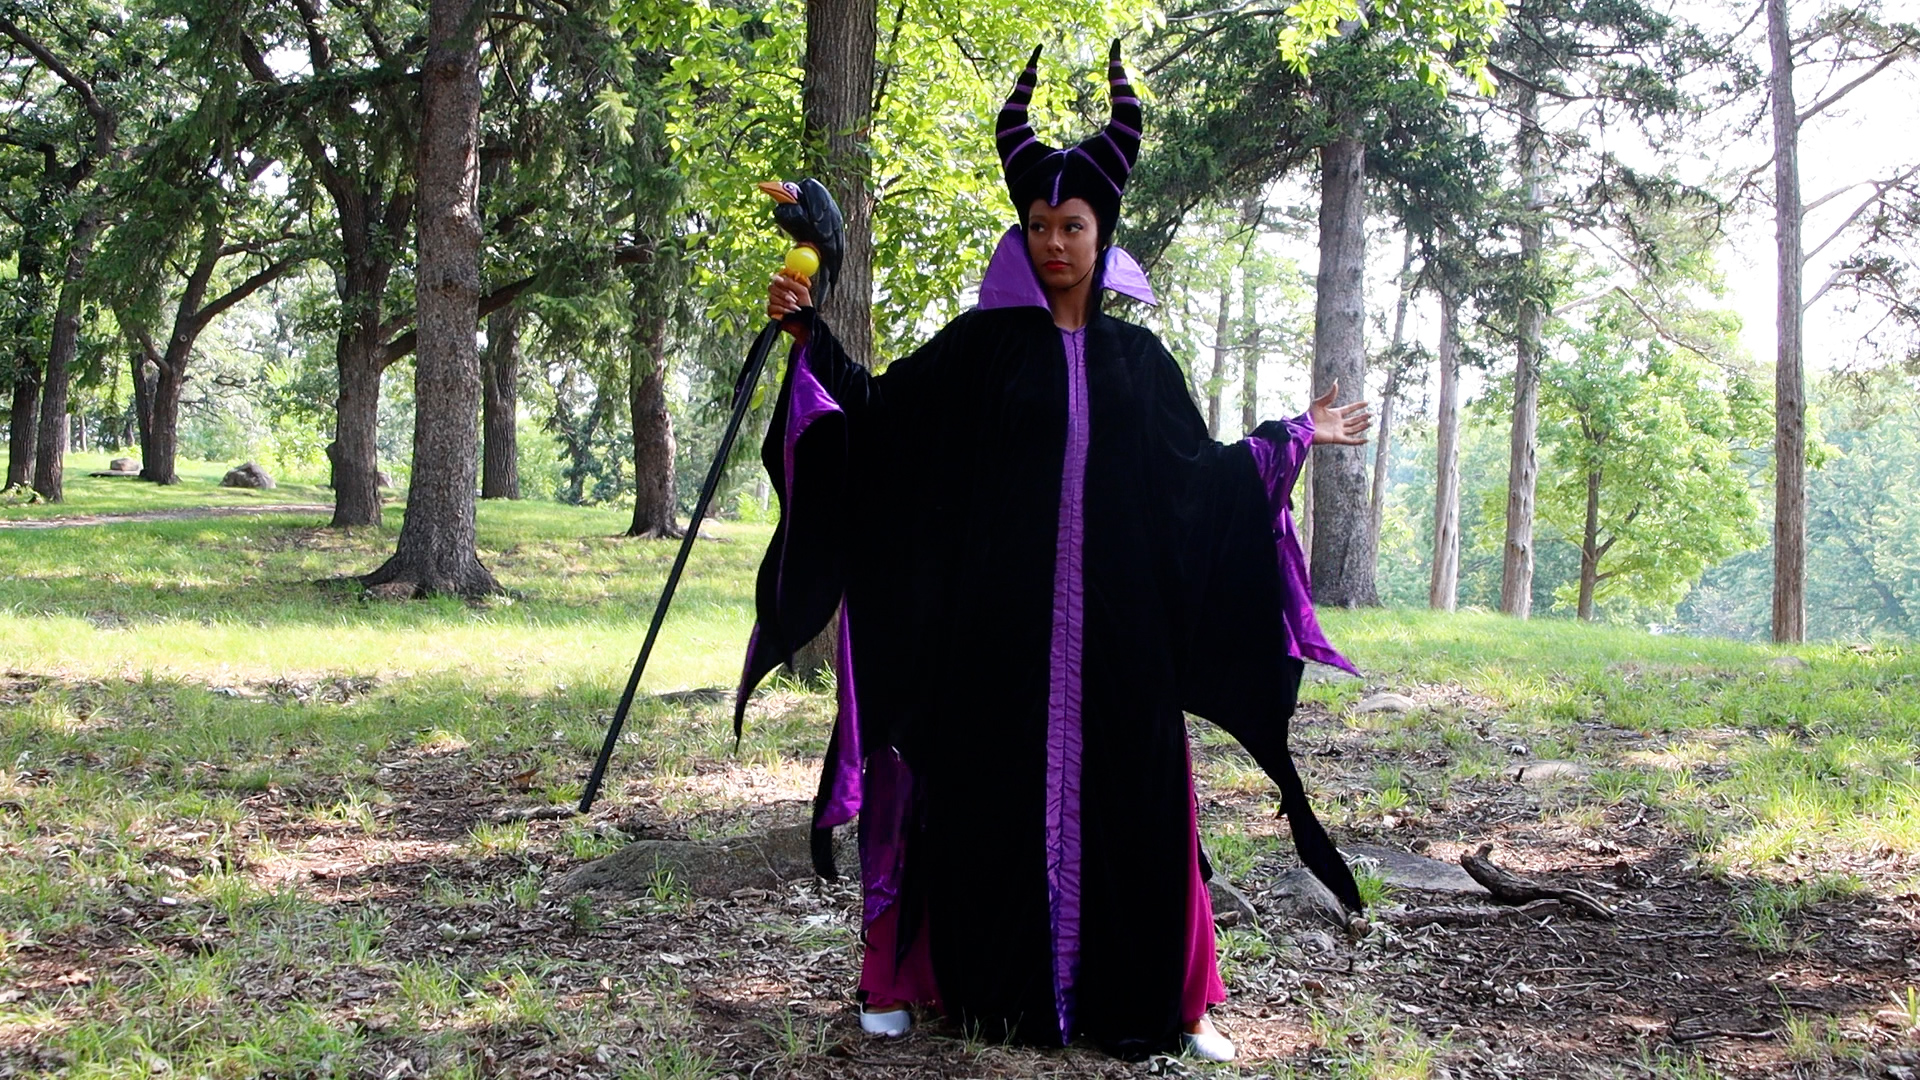 Classic Maleficent Adult Costume